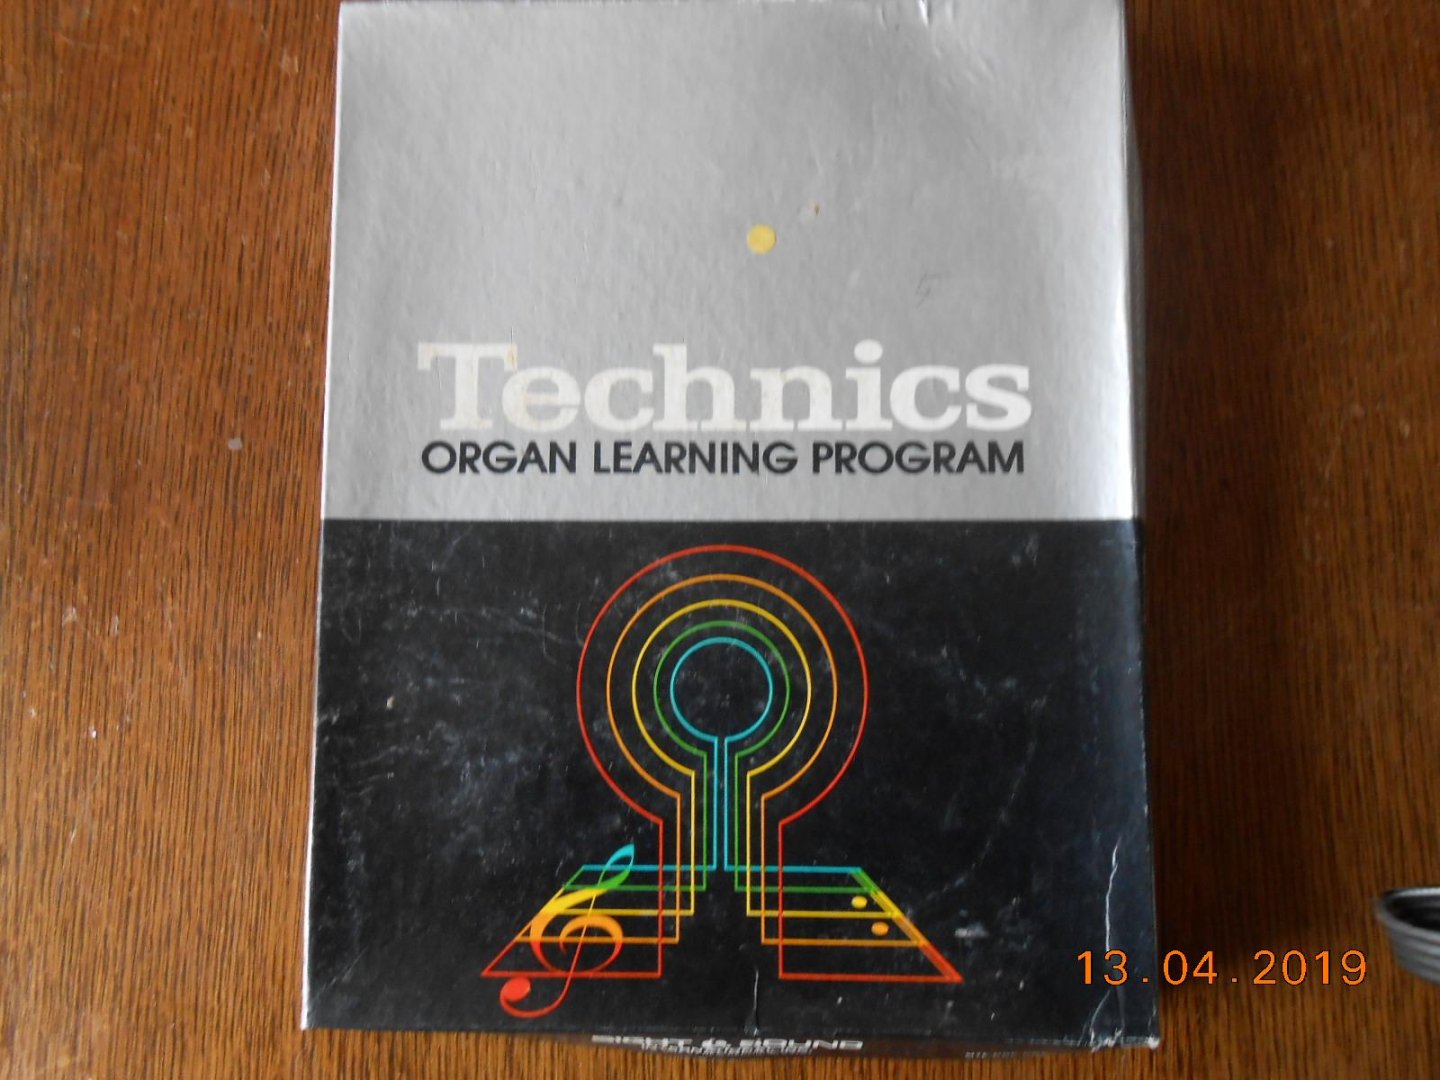  - Technics Organ Learning Program